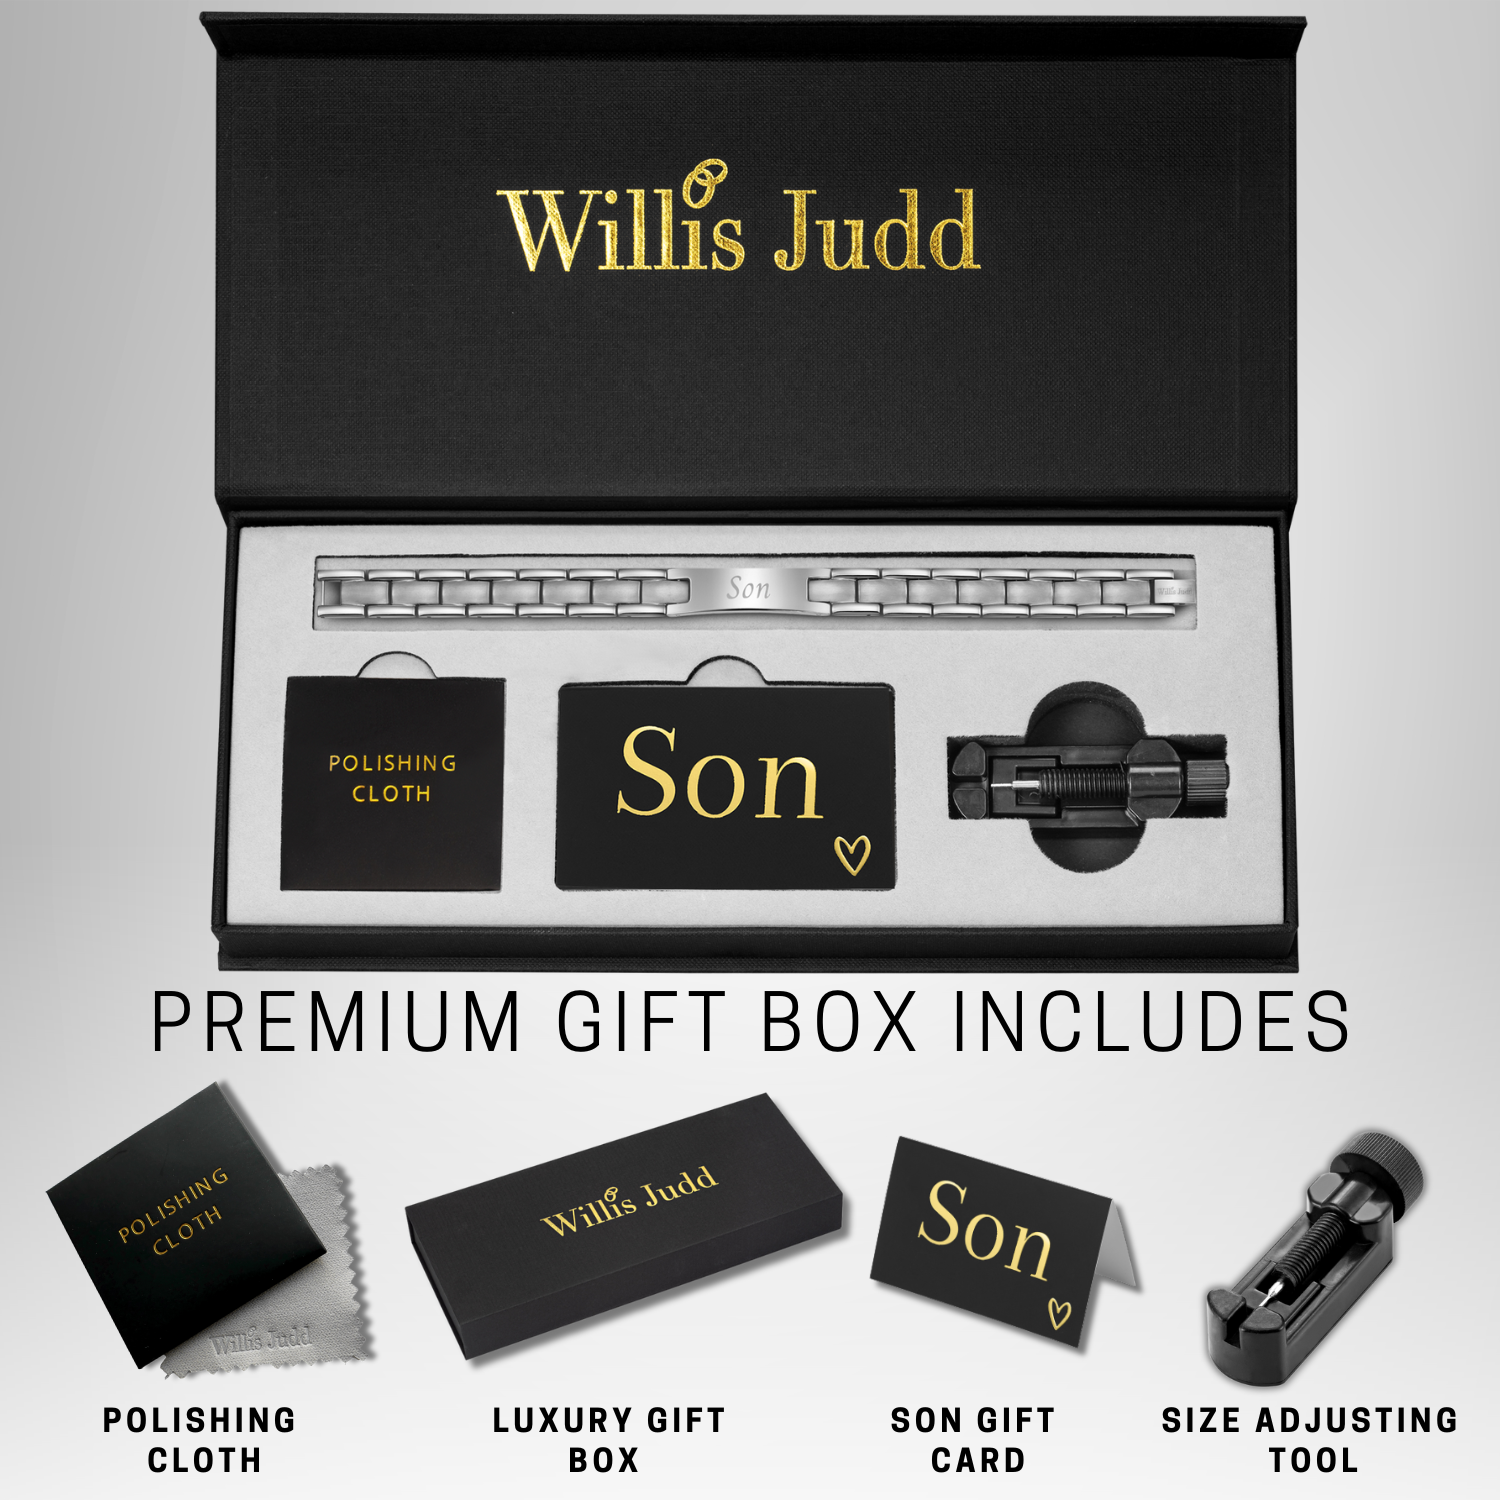 Willis Judd 'Love you Son' Etched bracelets